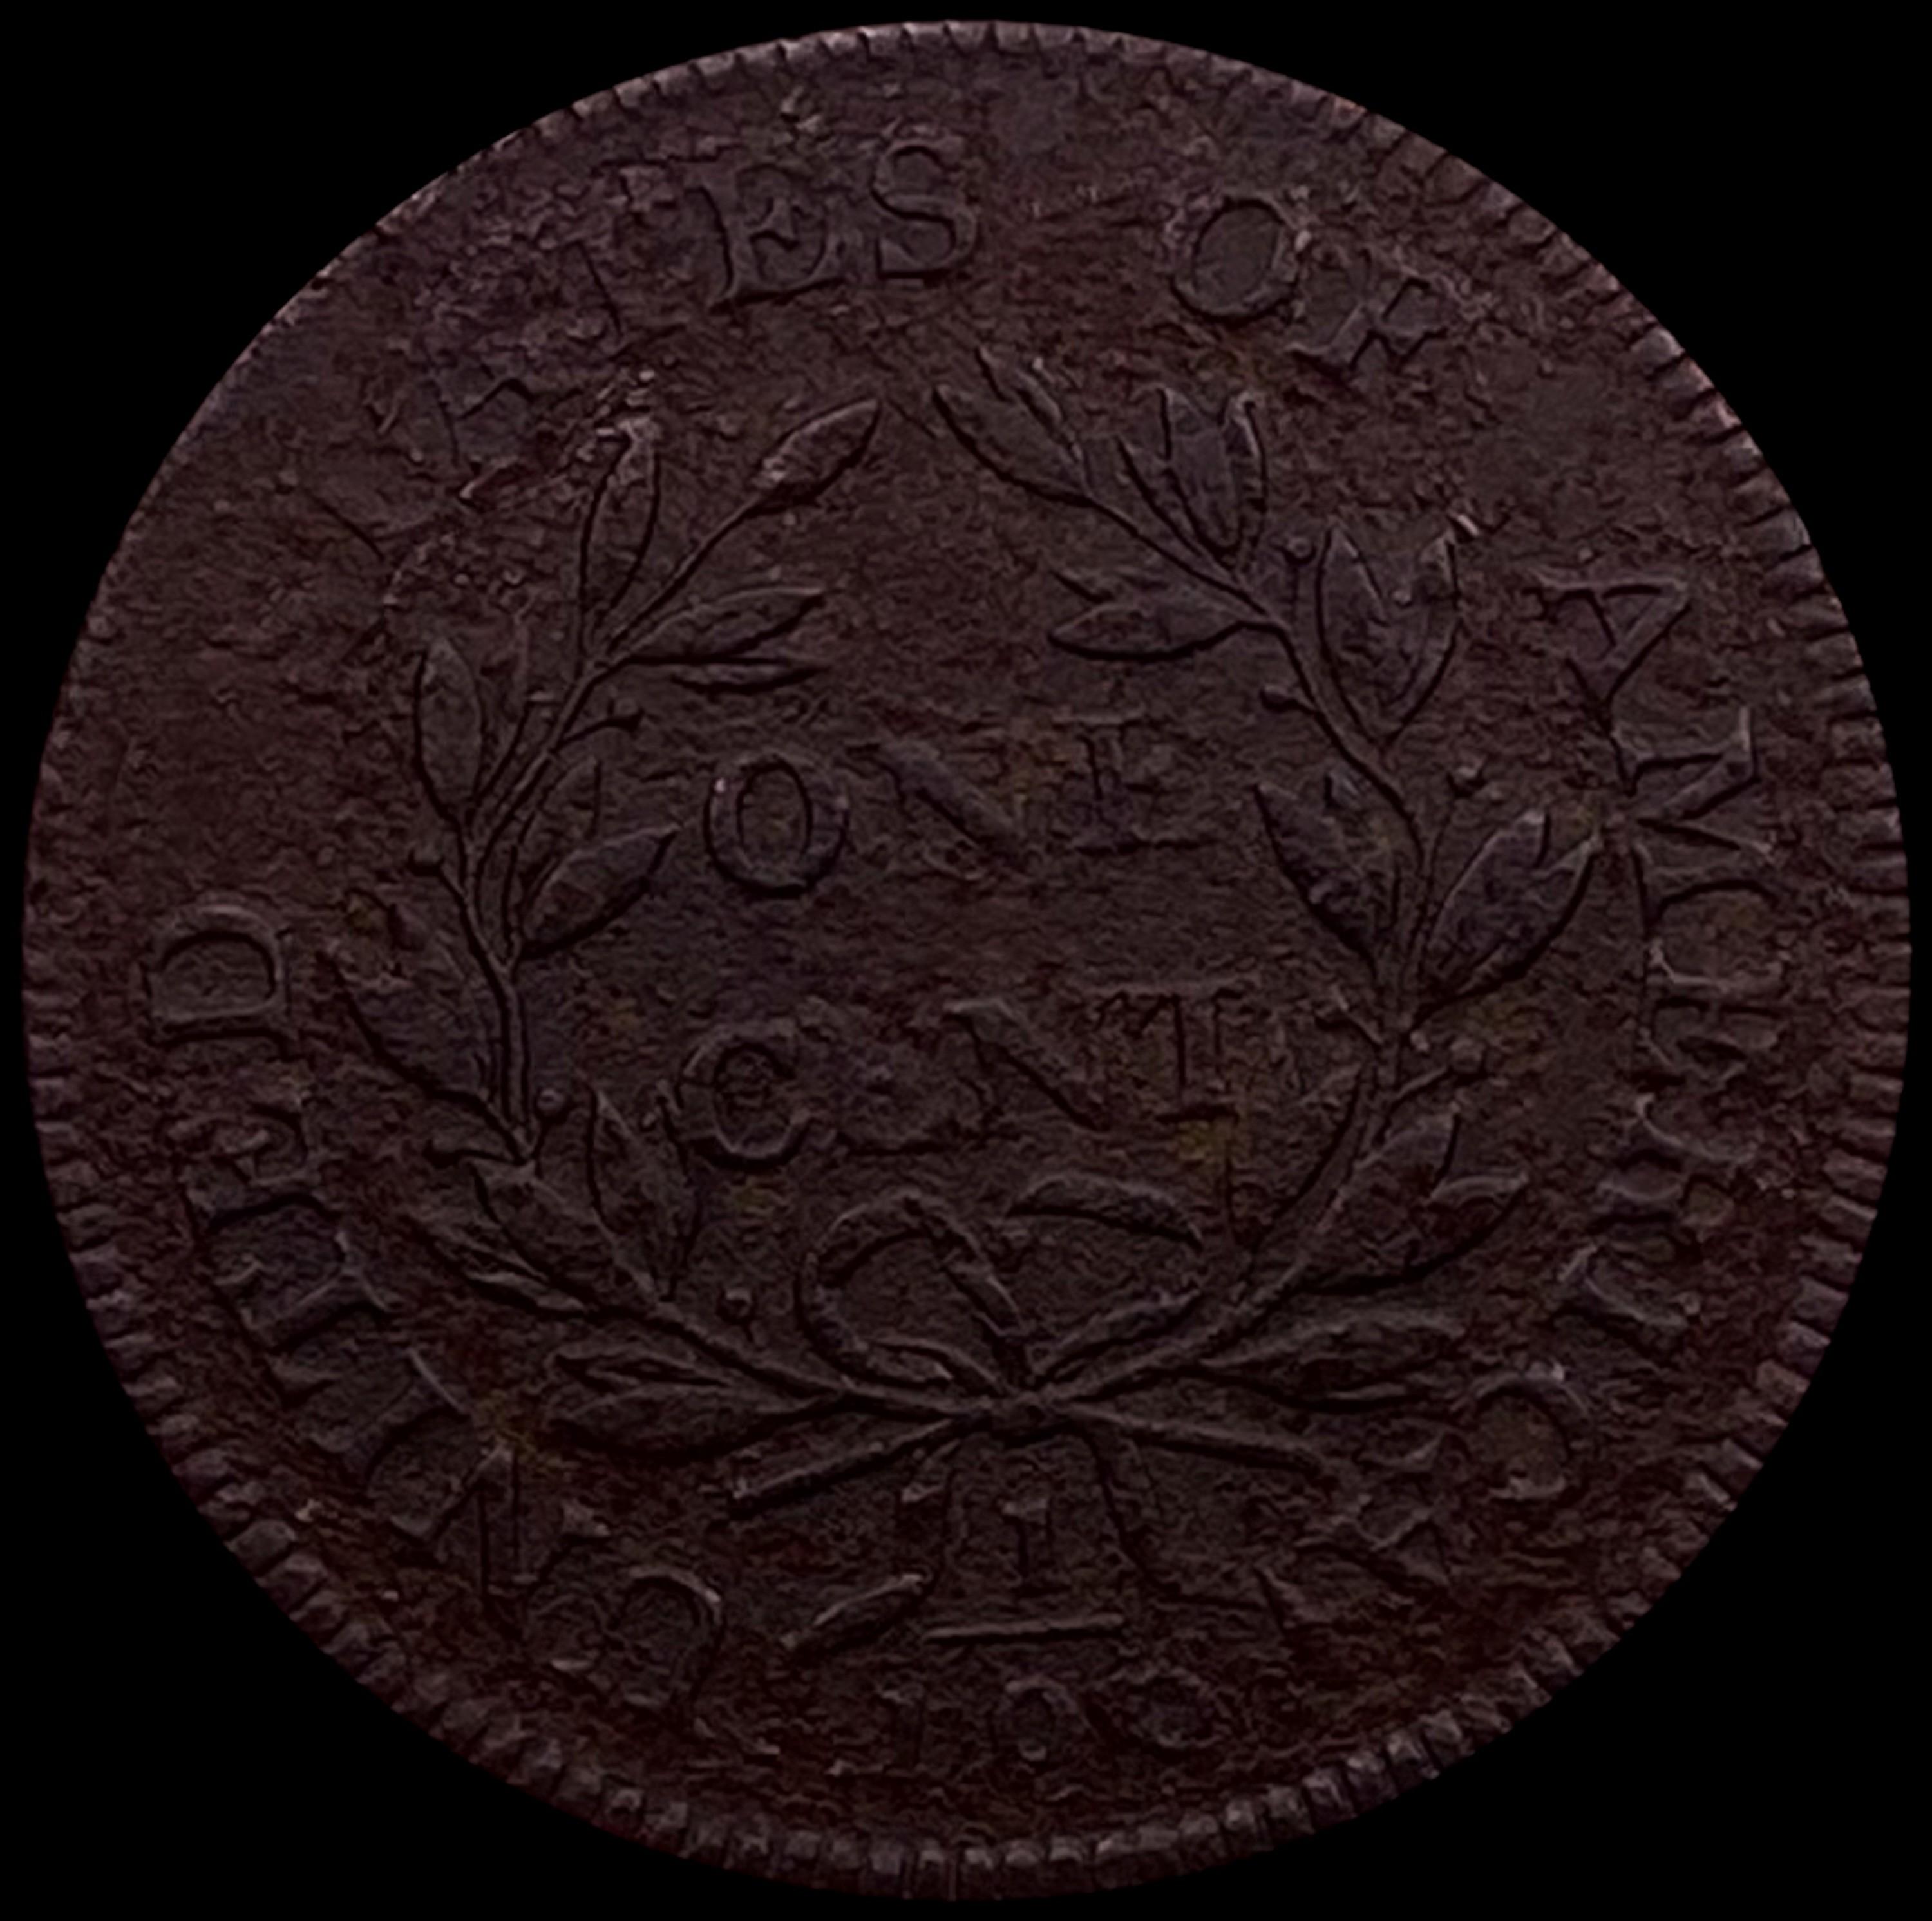 1798/7 Draped Bust Cent CHOICE AU